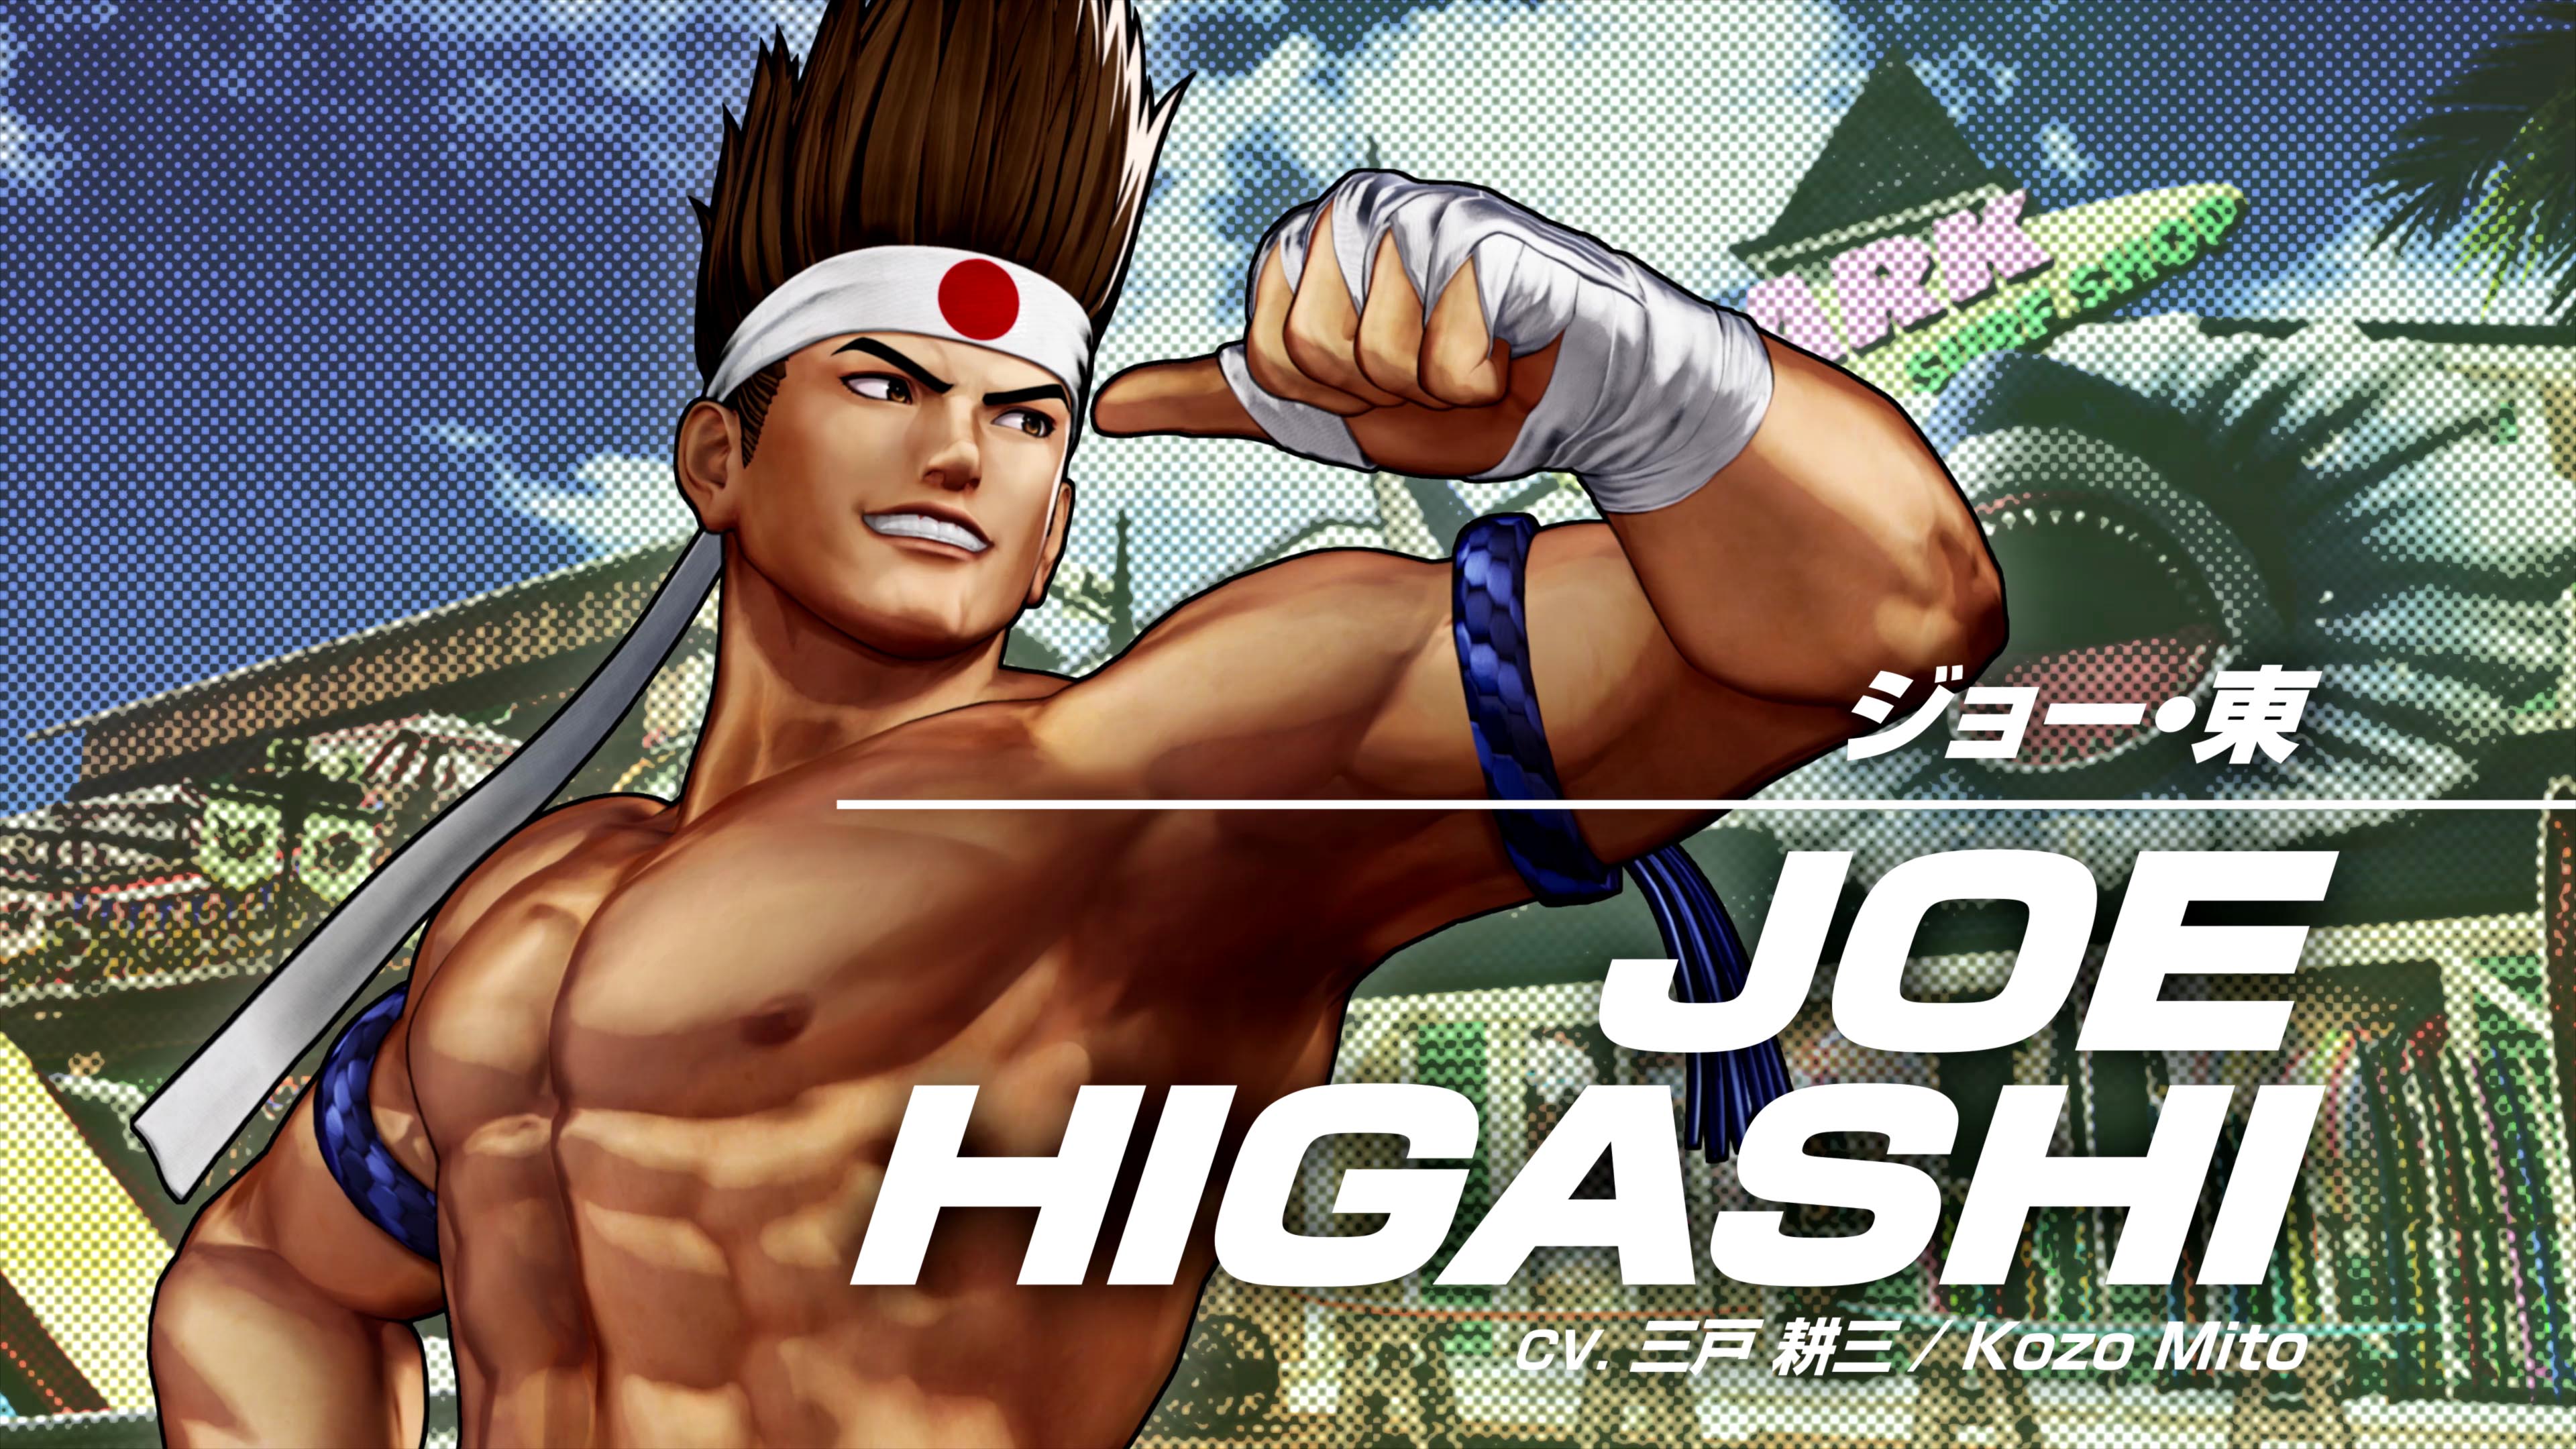 Joe Higashi King of Fighters Wallpaper Anime Image Board